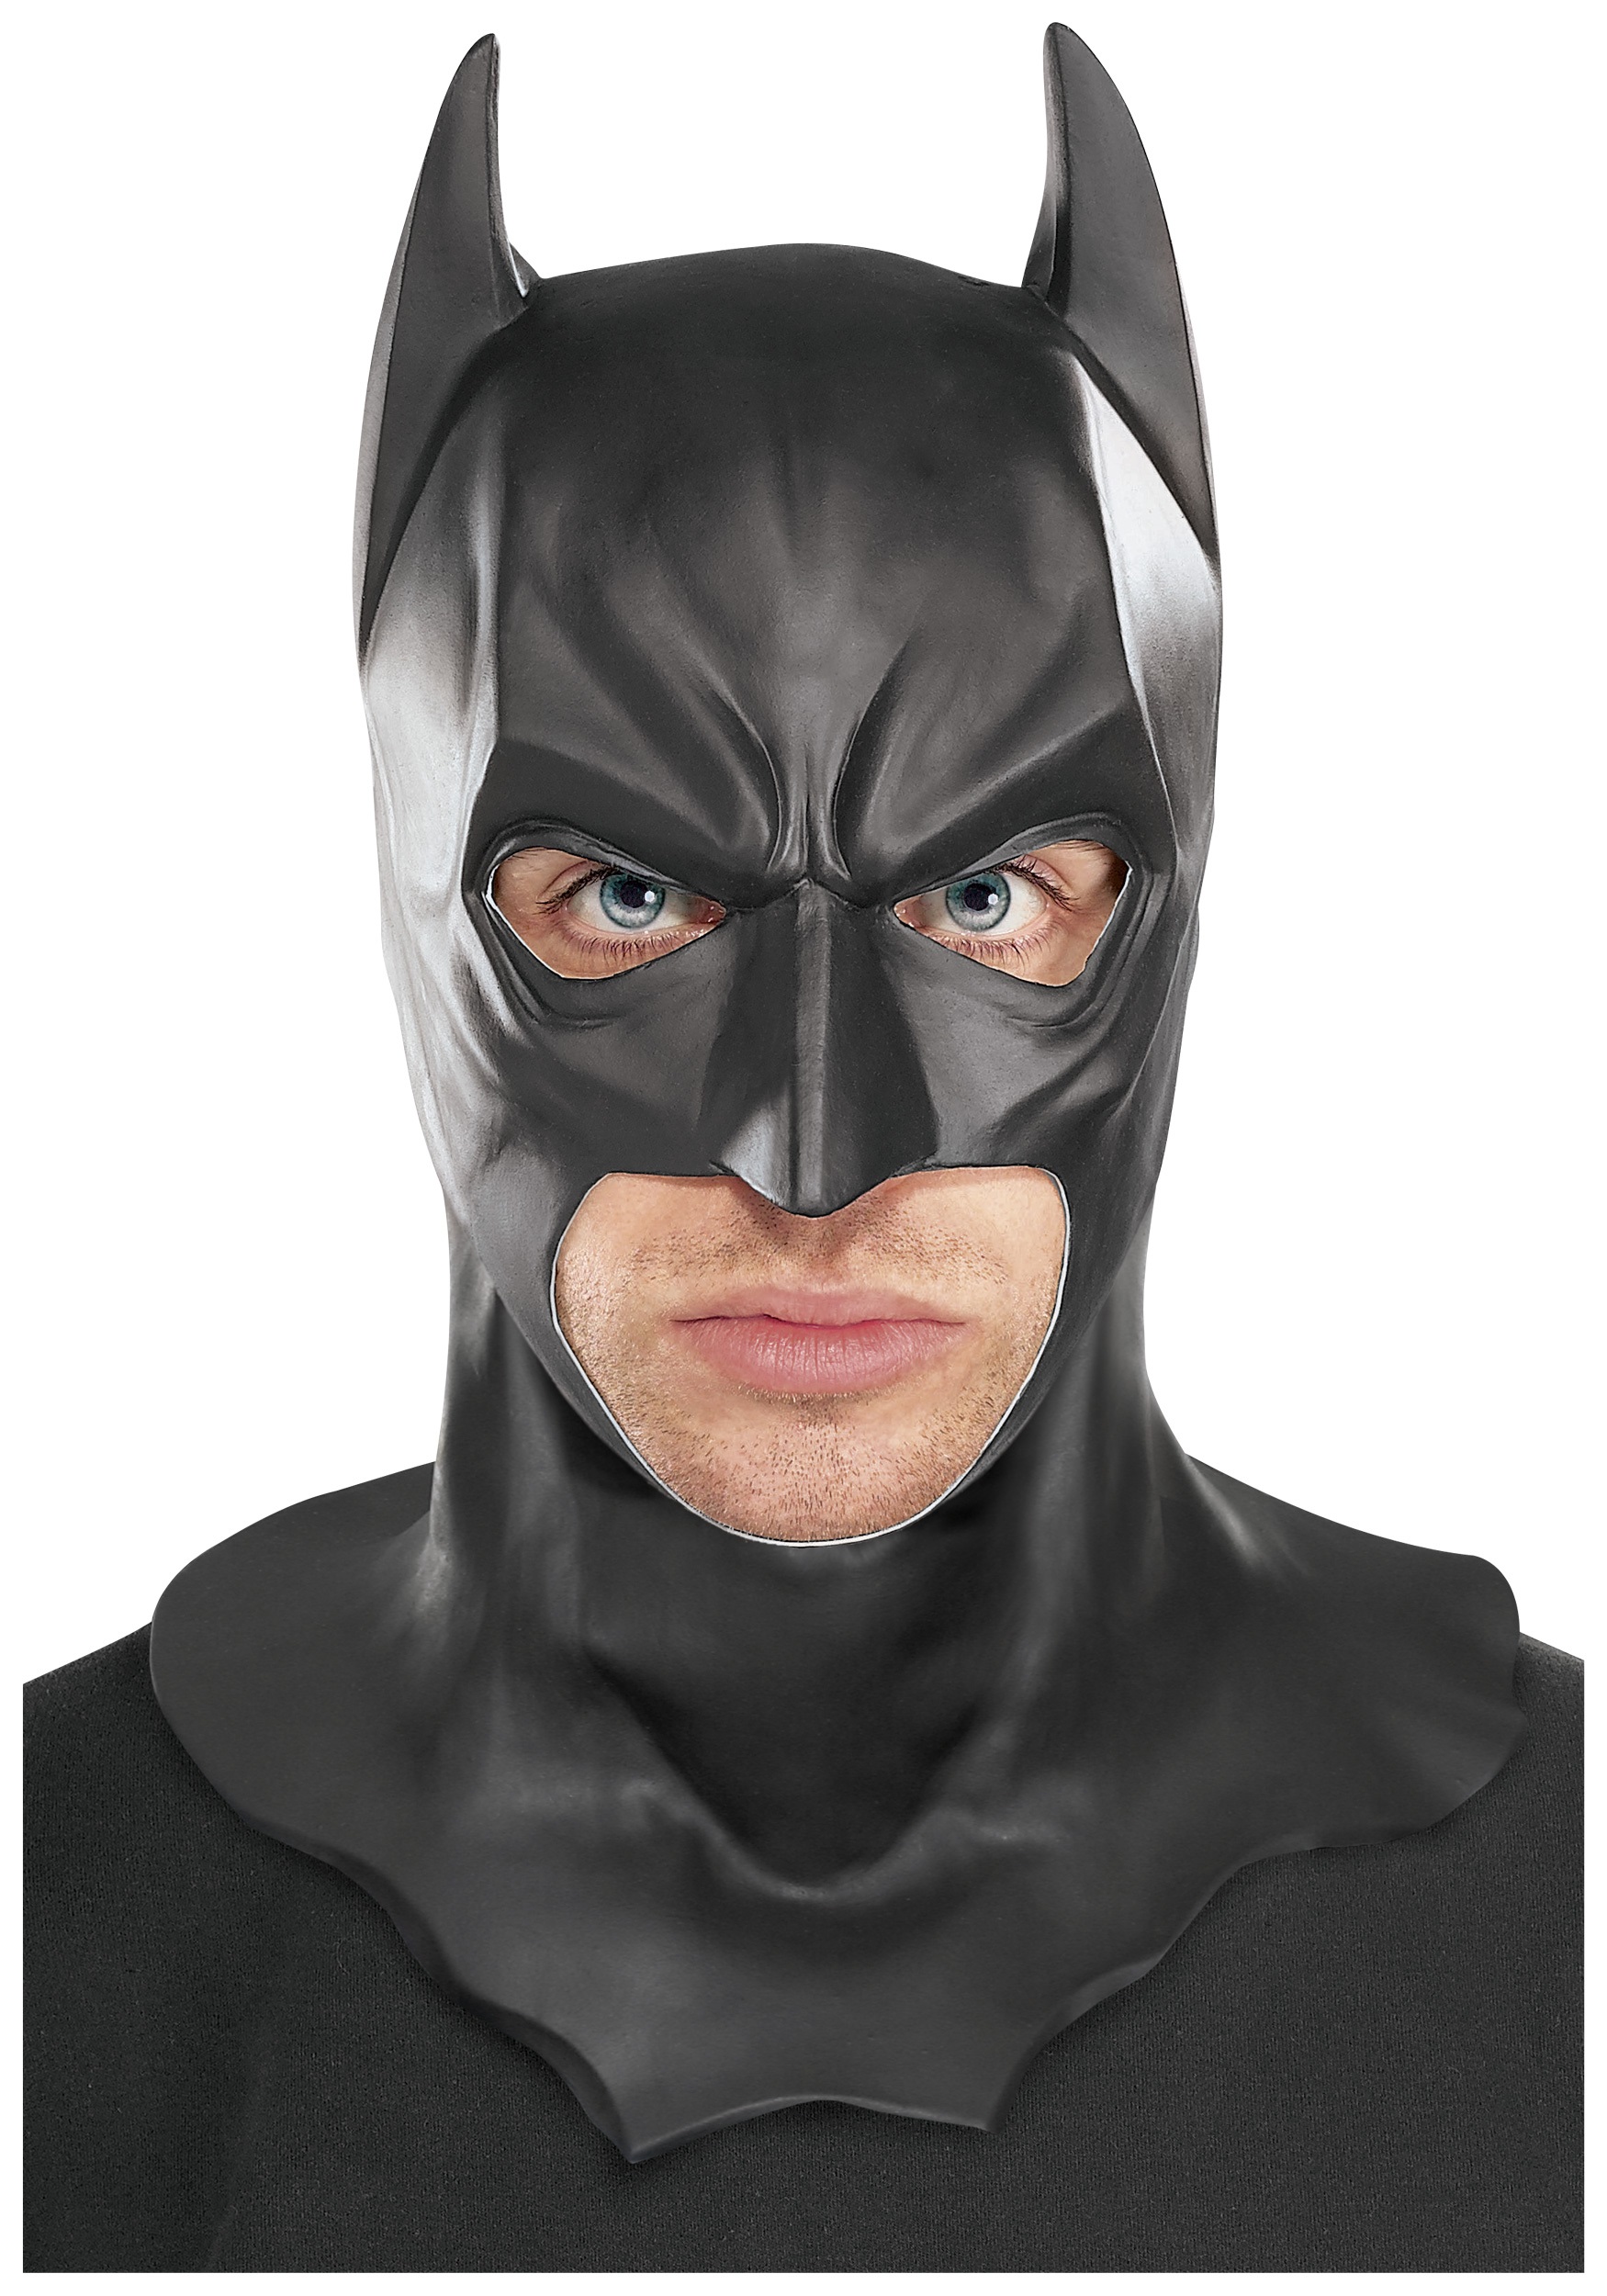 batman mask eBay